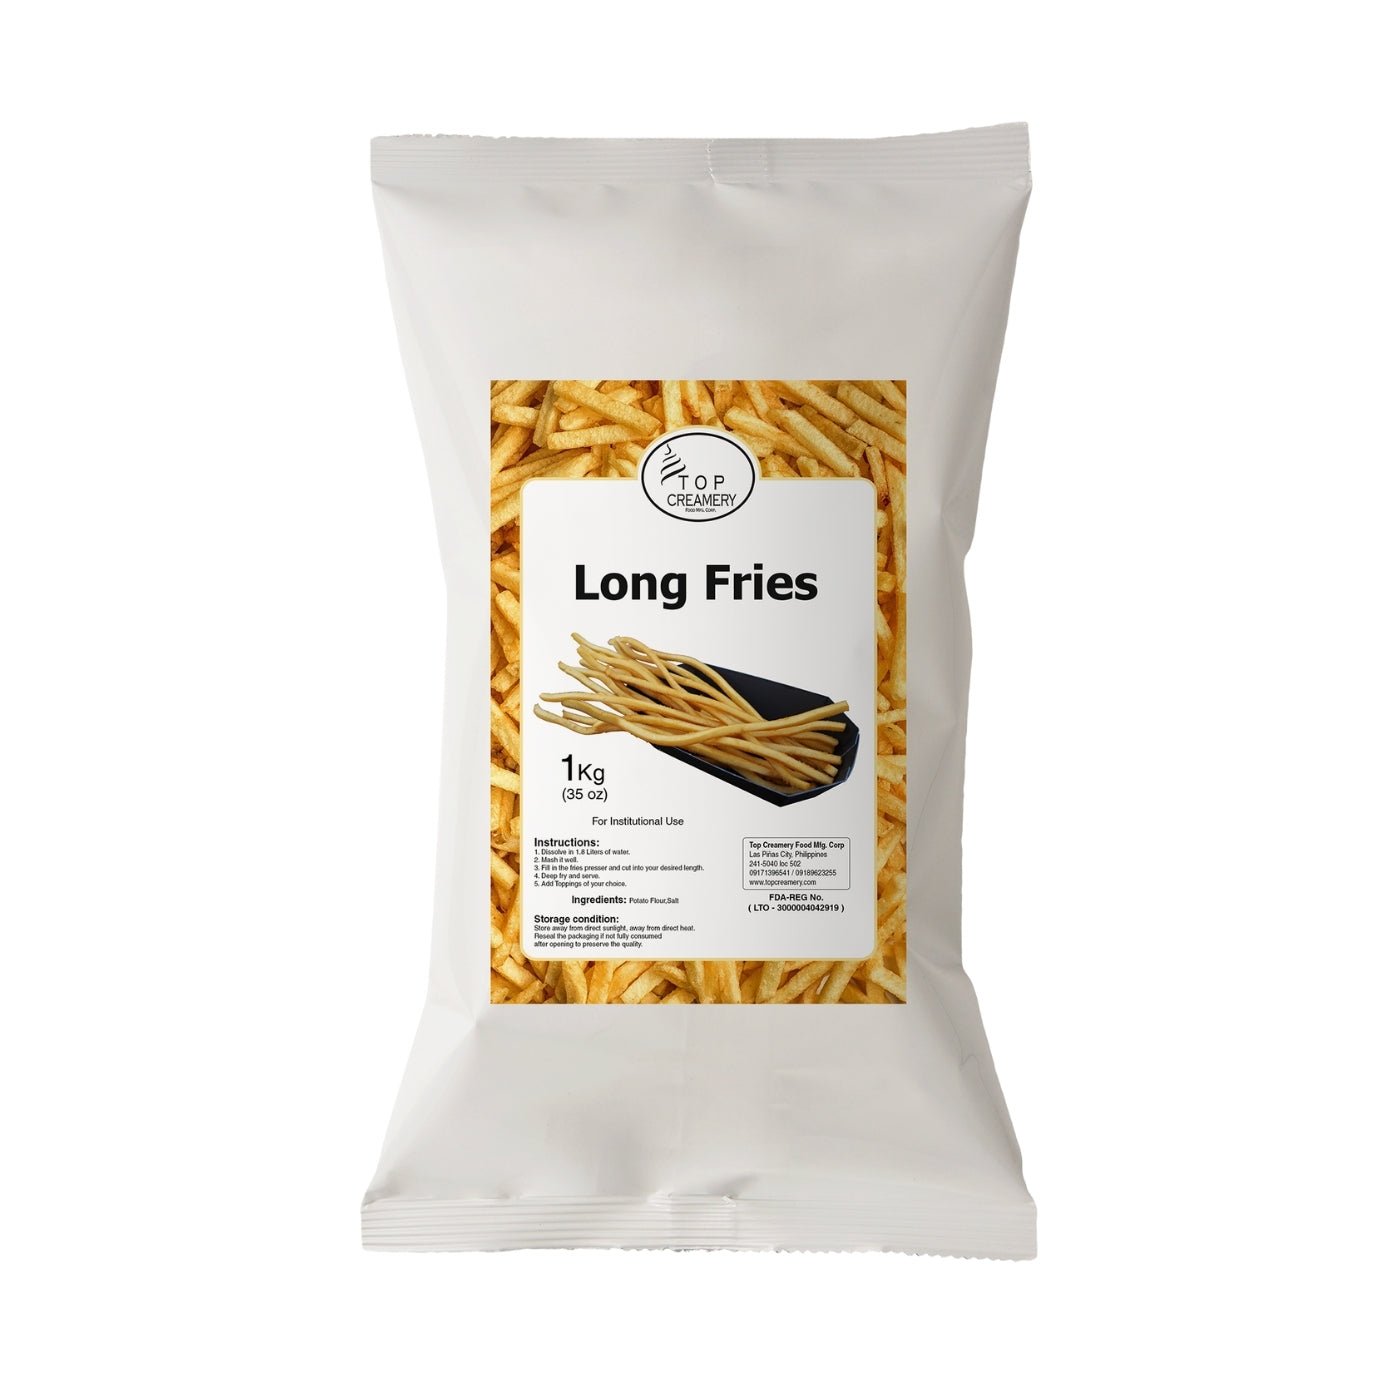 TOP Creamery Long Fries Potato Powder Mix Plain Flavor 1kg - Kreme City Supplies